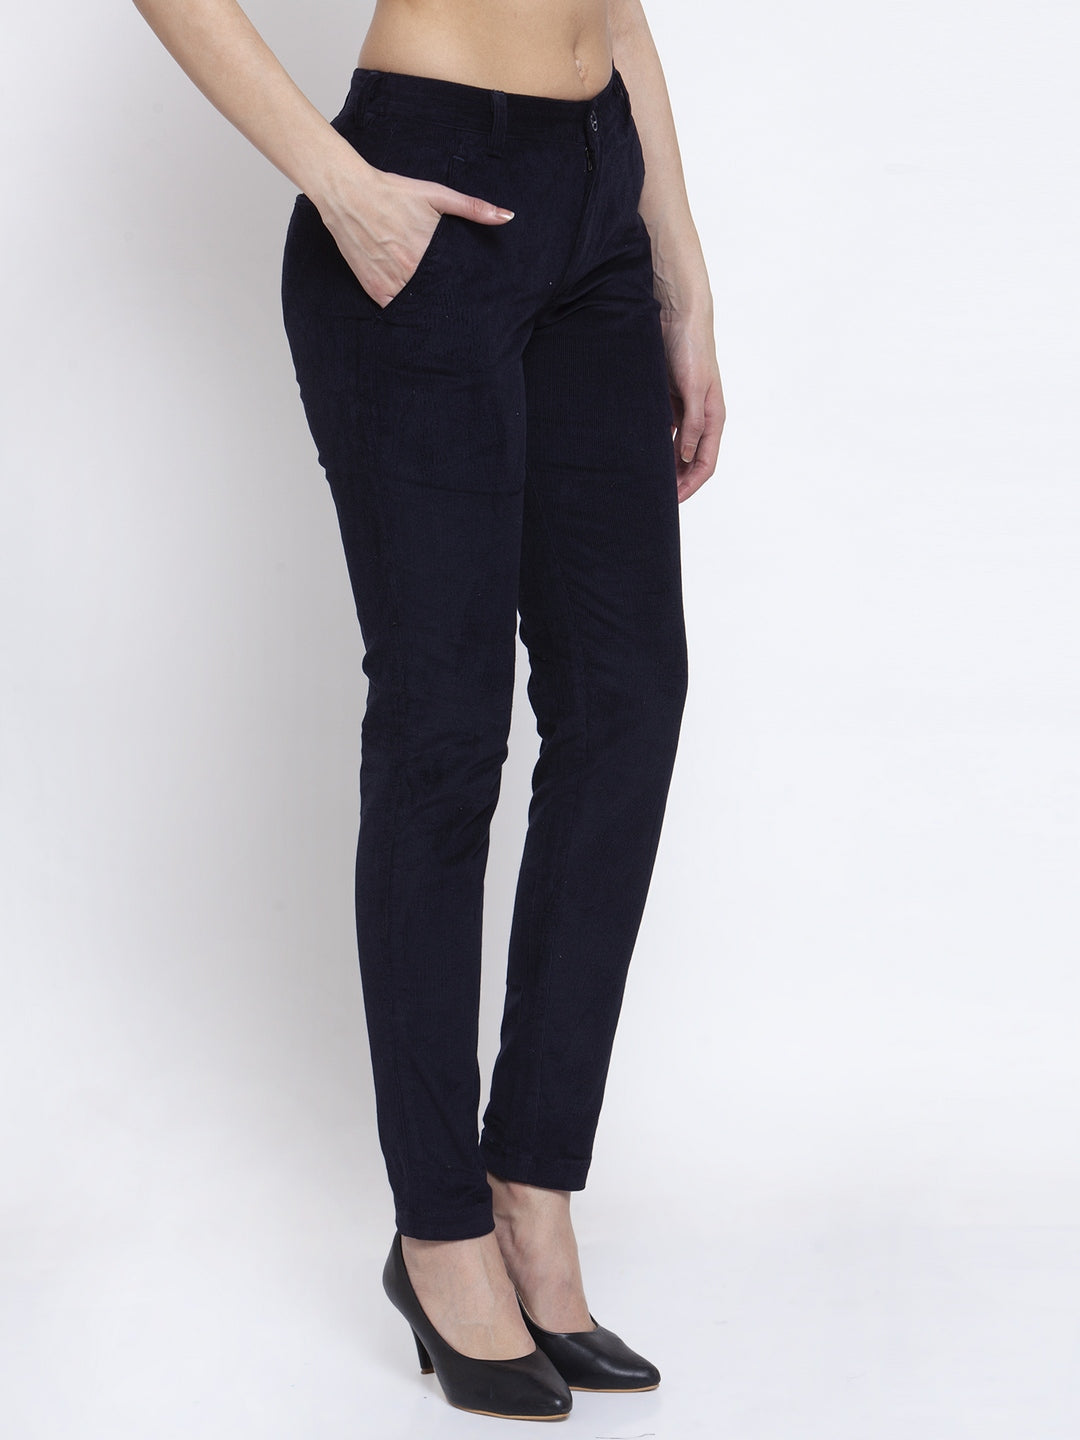 Buy Casual Dark Gray Corduroy Pants, Corduroy Harem Pants, Plus Size Pants,  Handmade High Waist Corduroy Trousers, Autumn Winter Pants C1910 Online in  India - Etsy